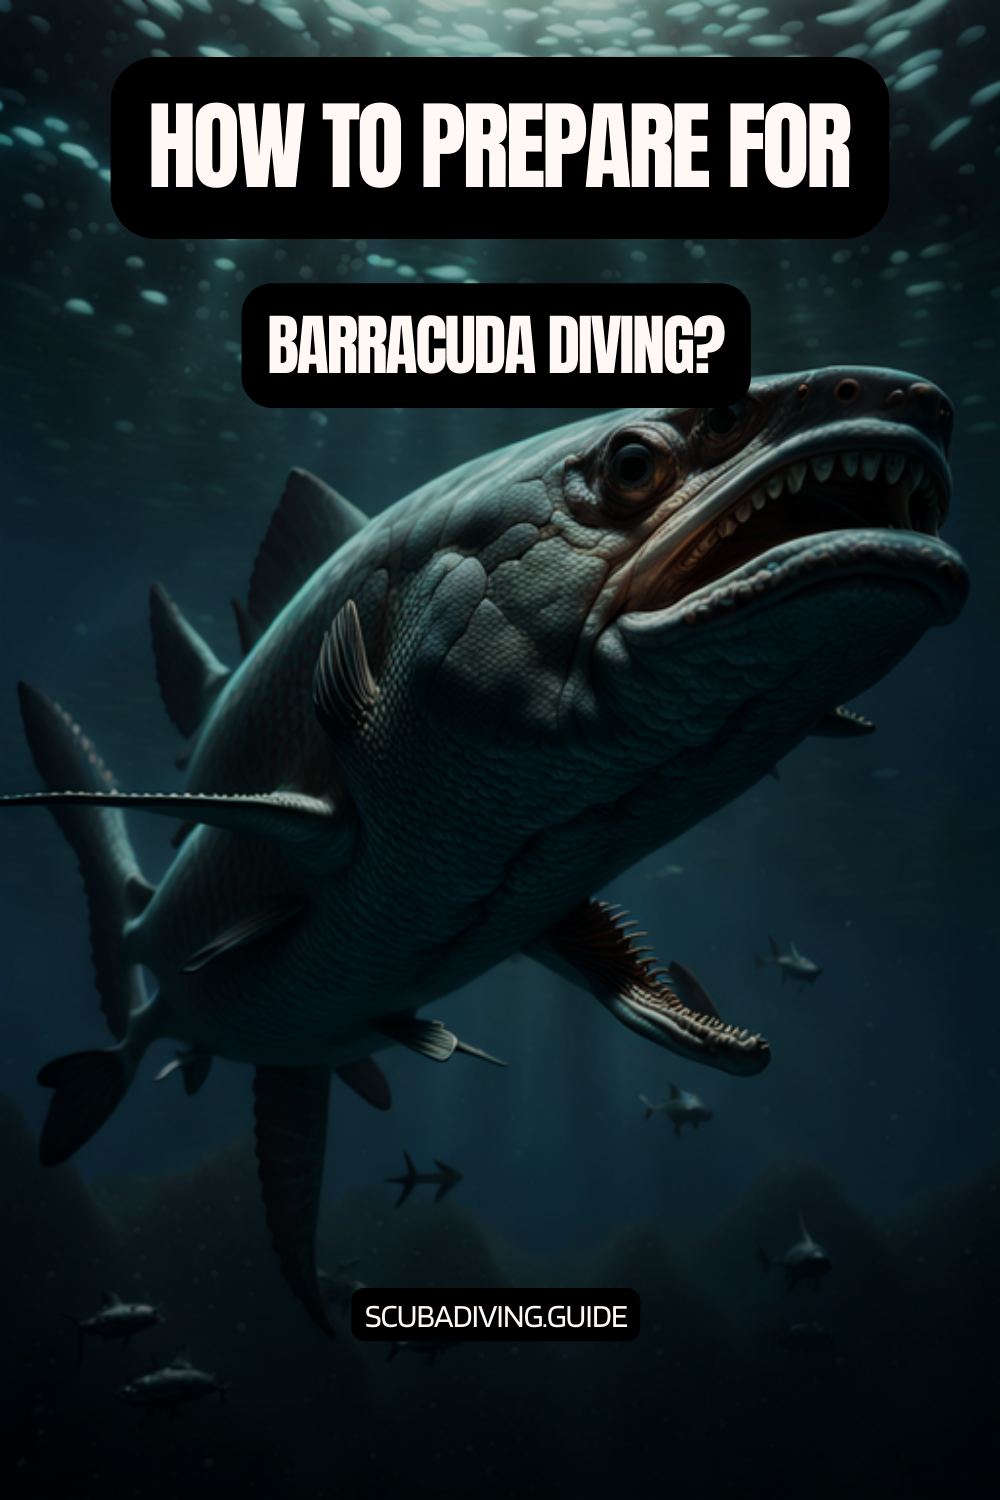 Preparing for a Barracuda Dive